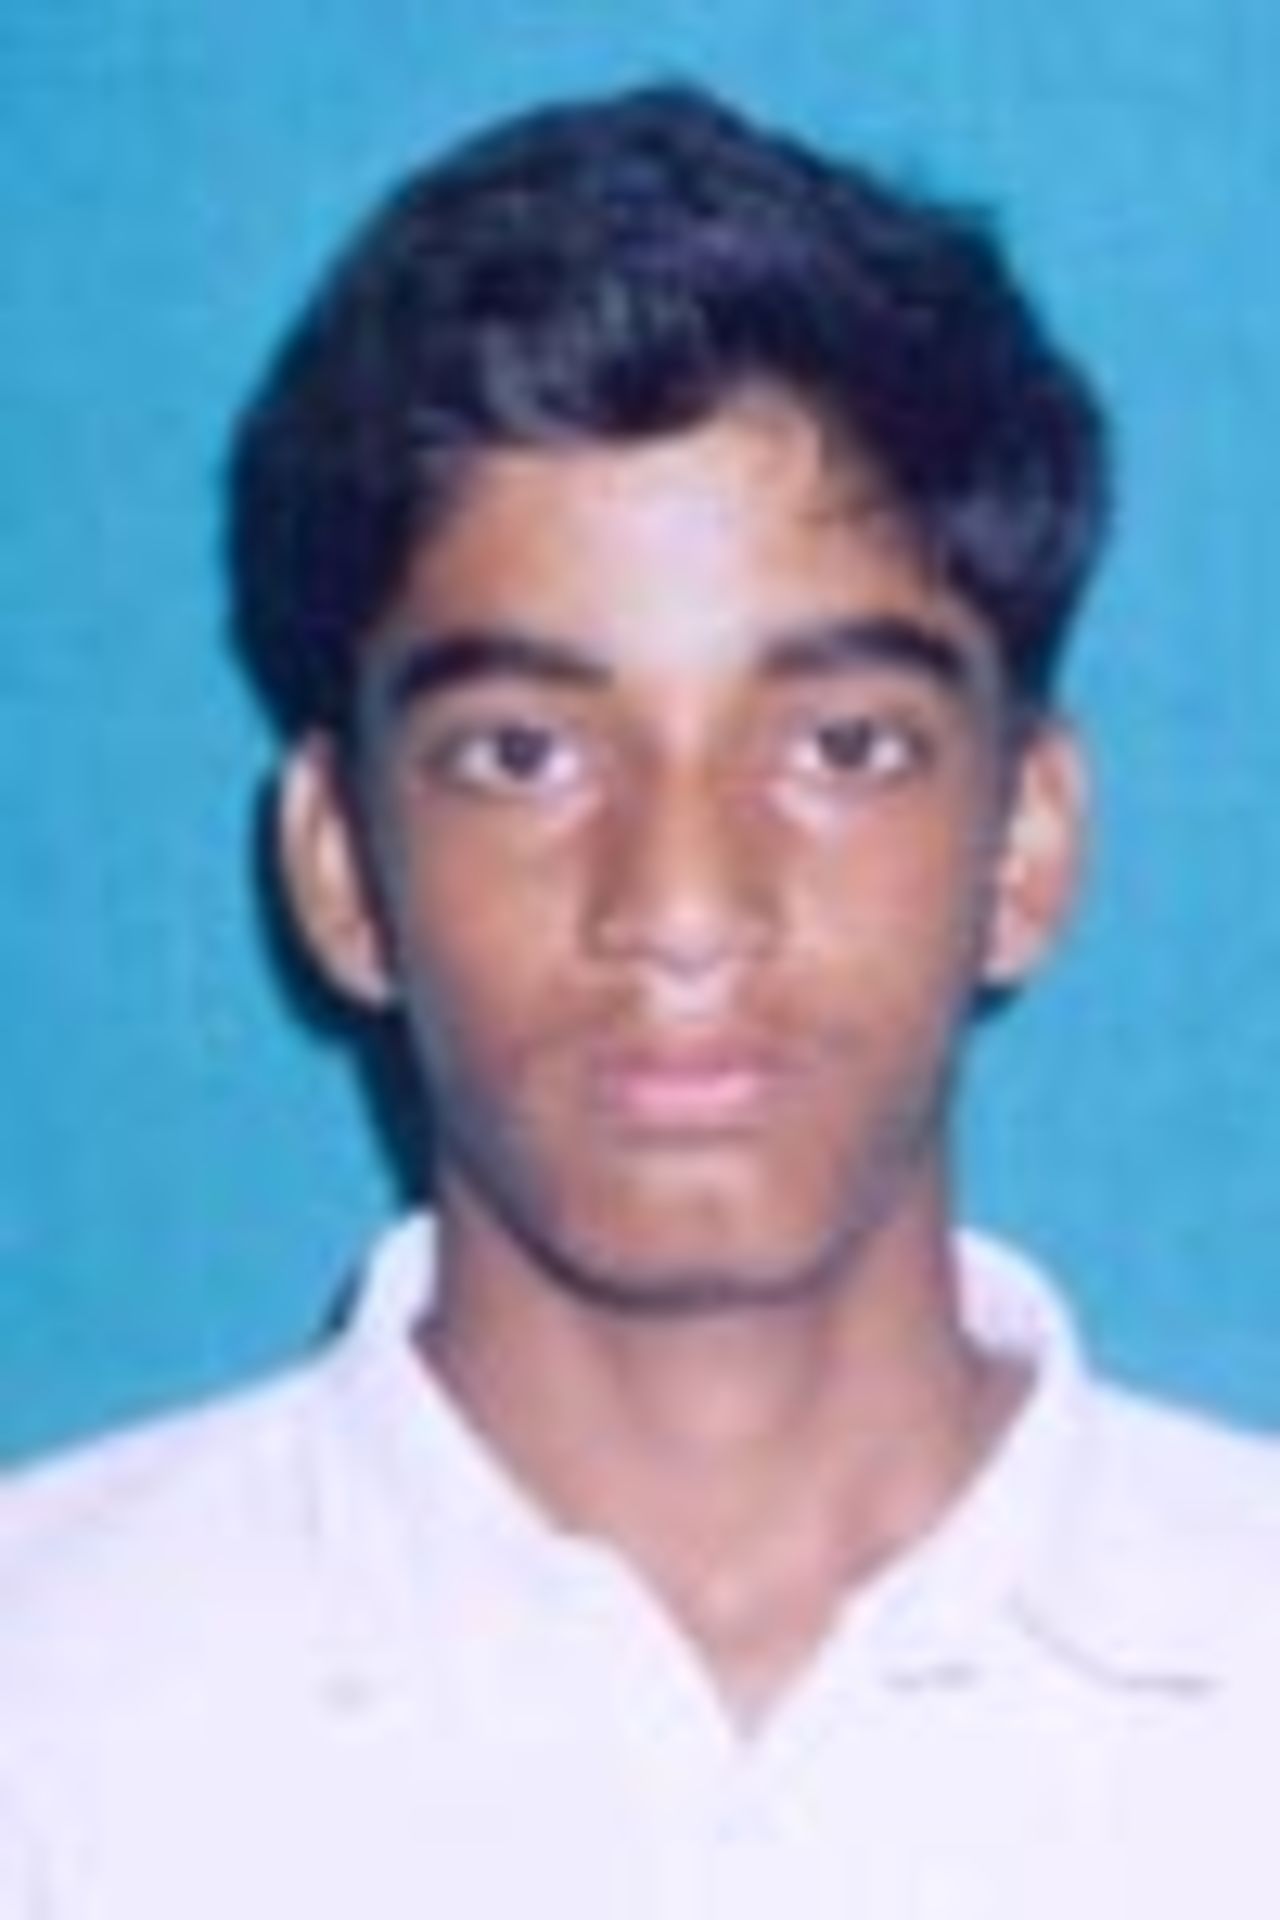 Rahul Singh, Bihar Under 14, Portrait